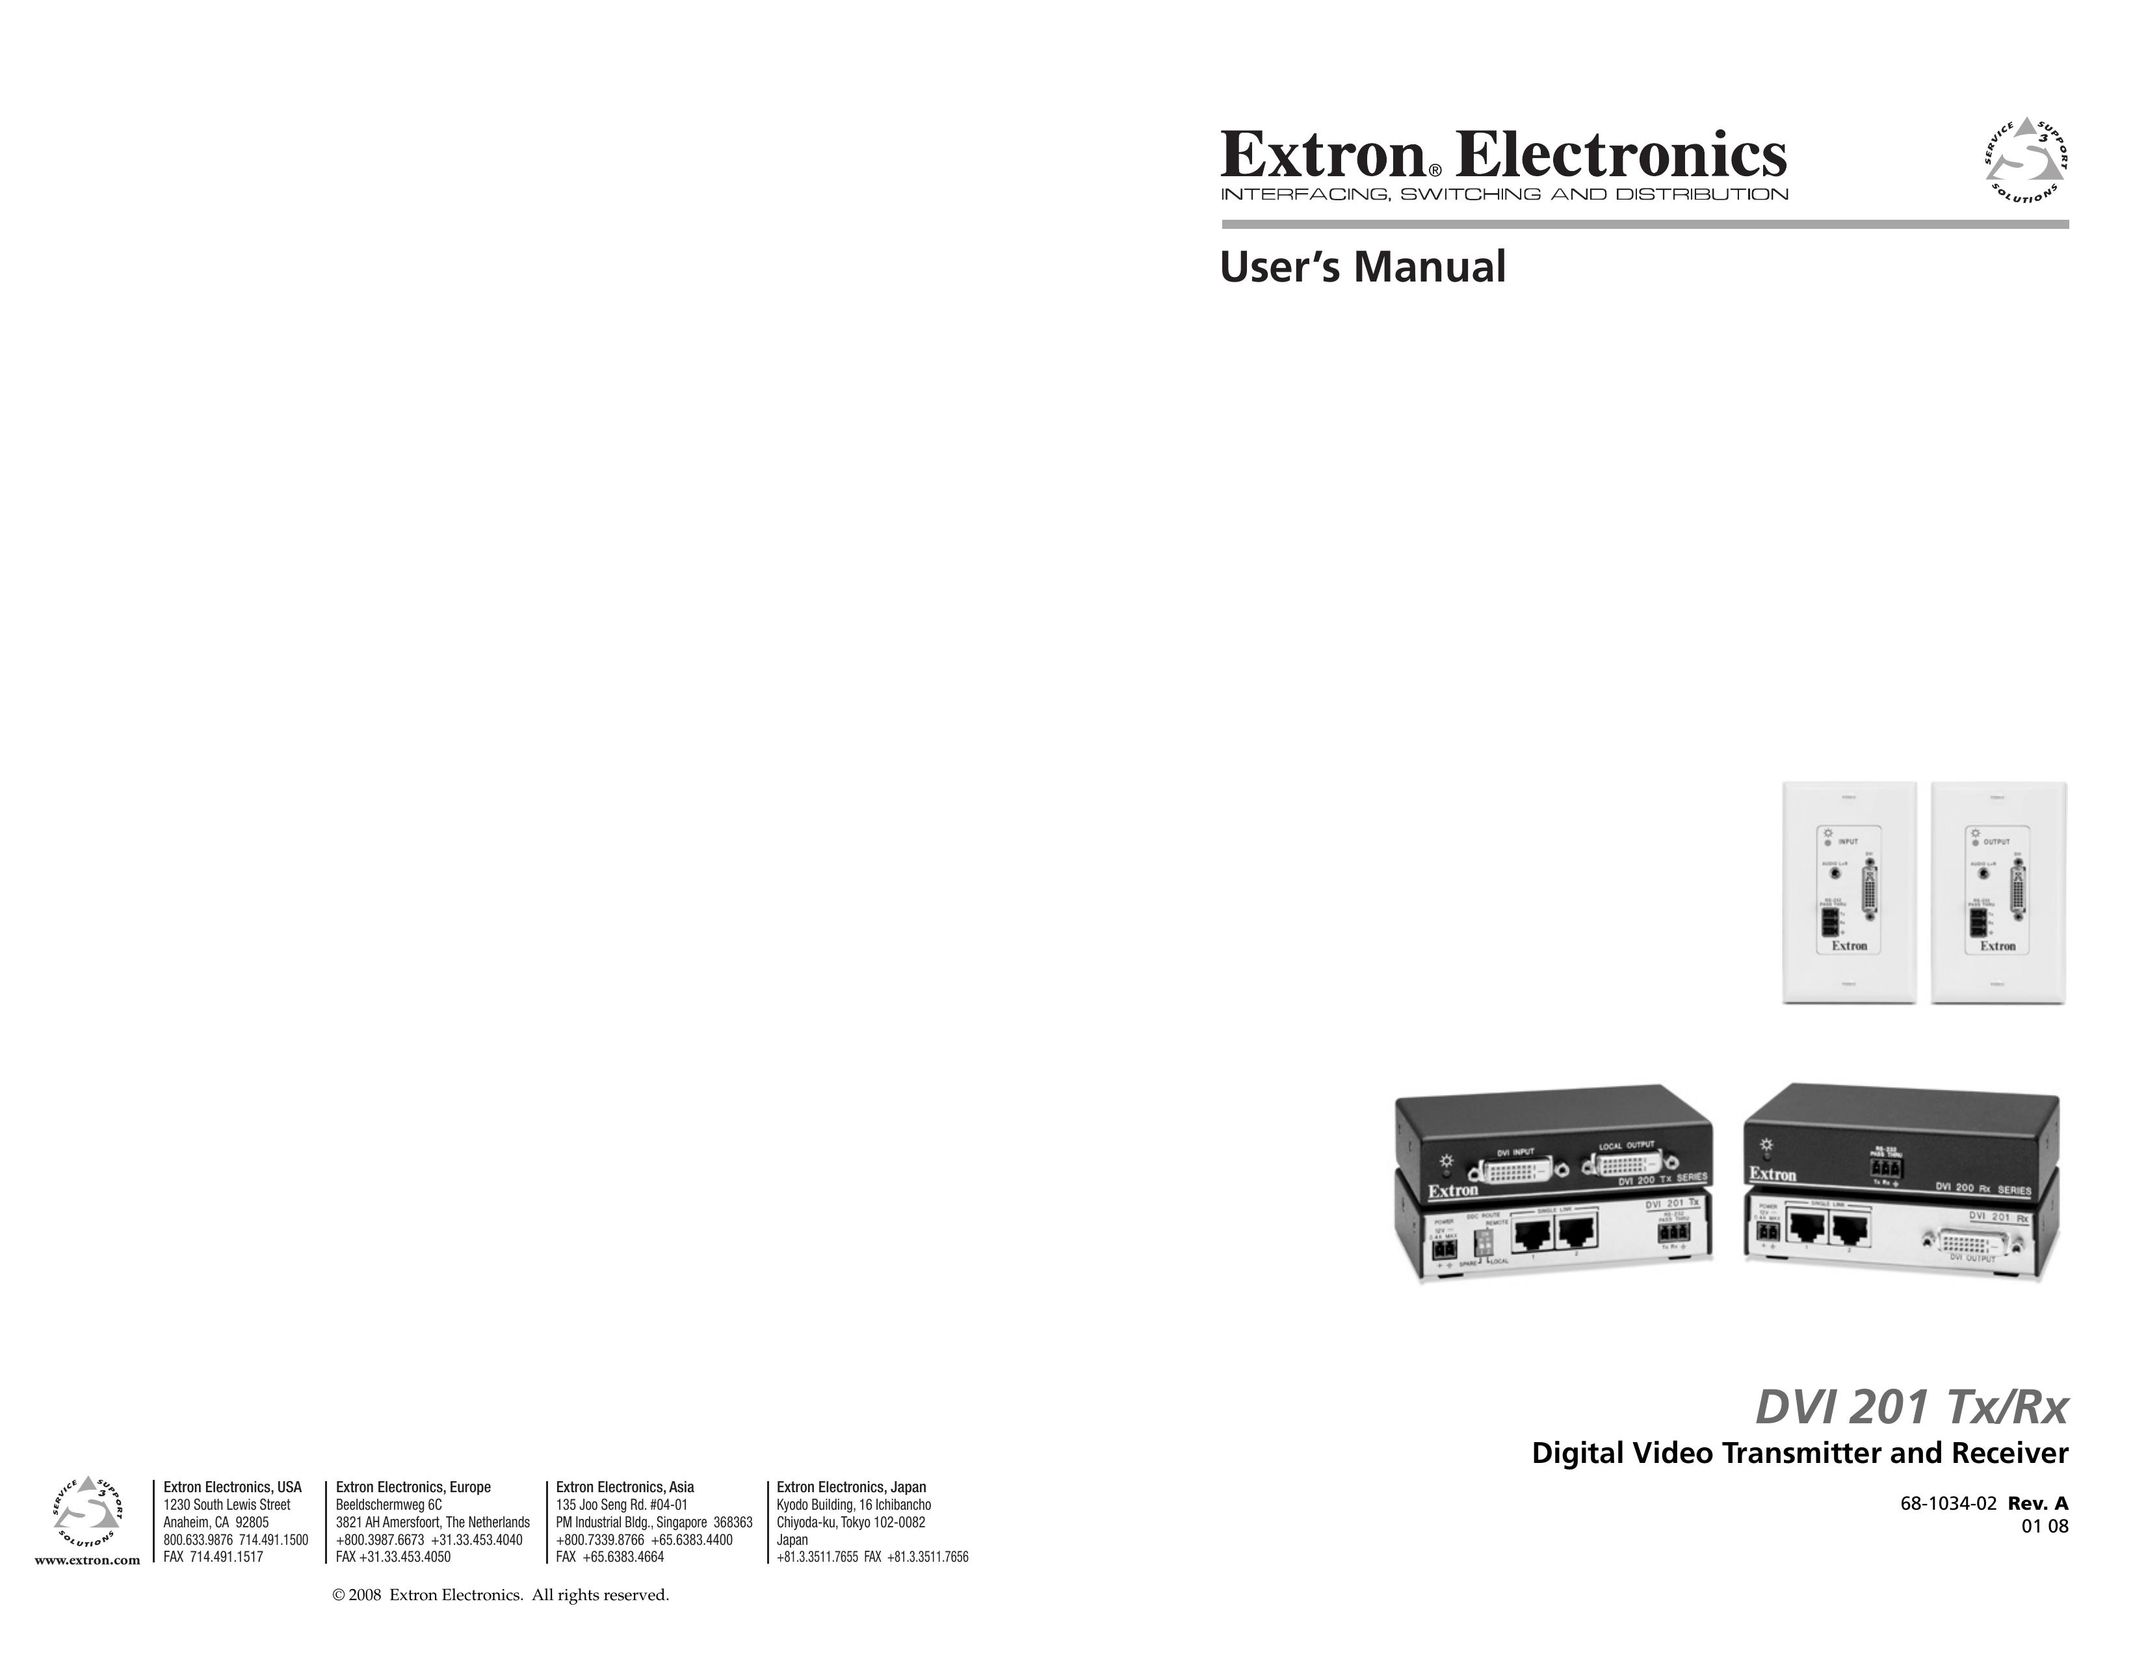 Extron electronic 68-1034-02 Rev. A Satellite Radio User Manual